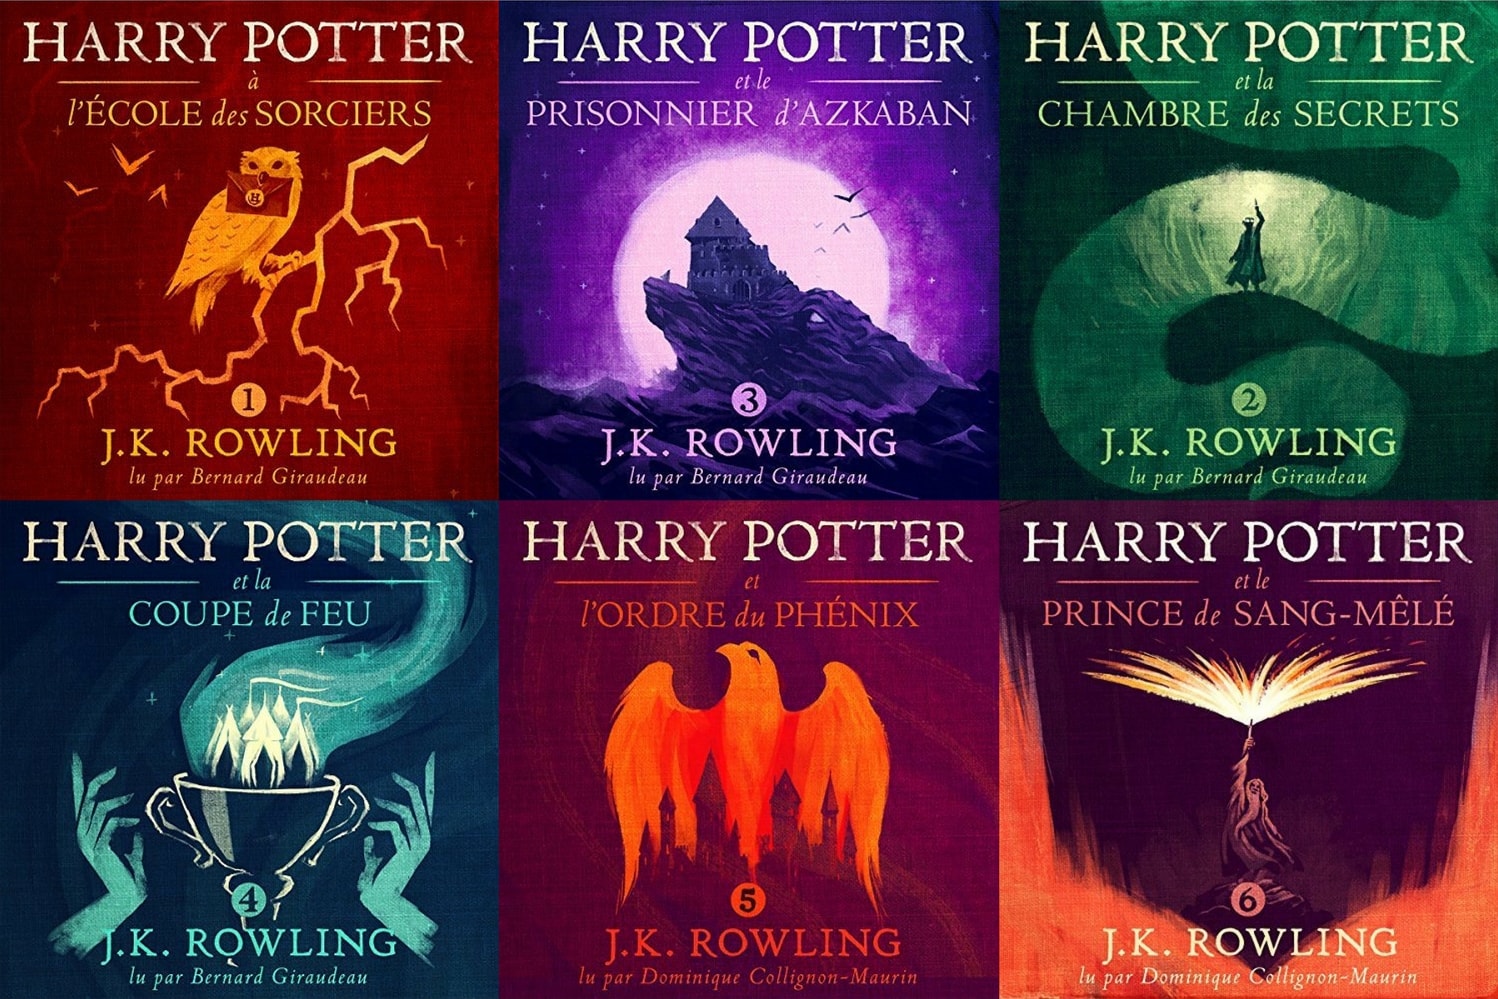 Harry Potter audible image couvertures tomes 1 à 6